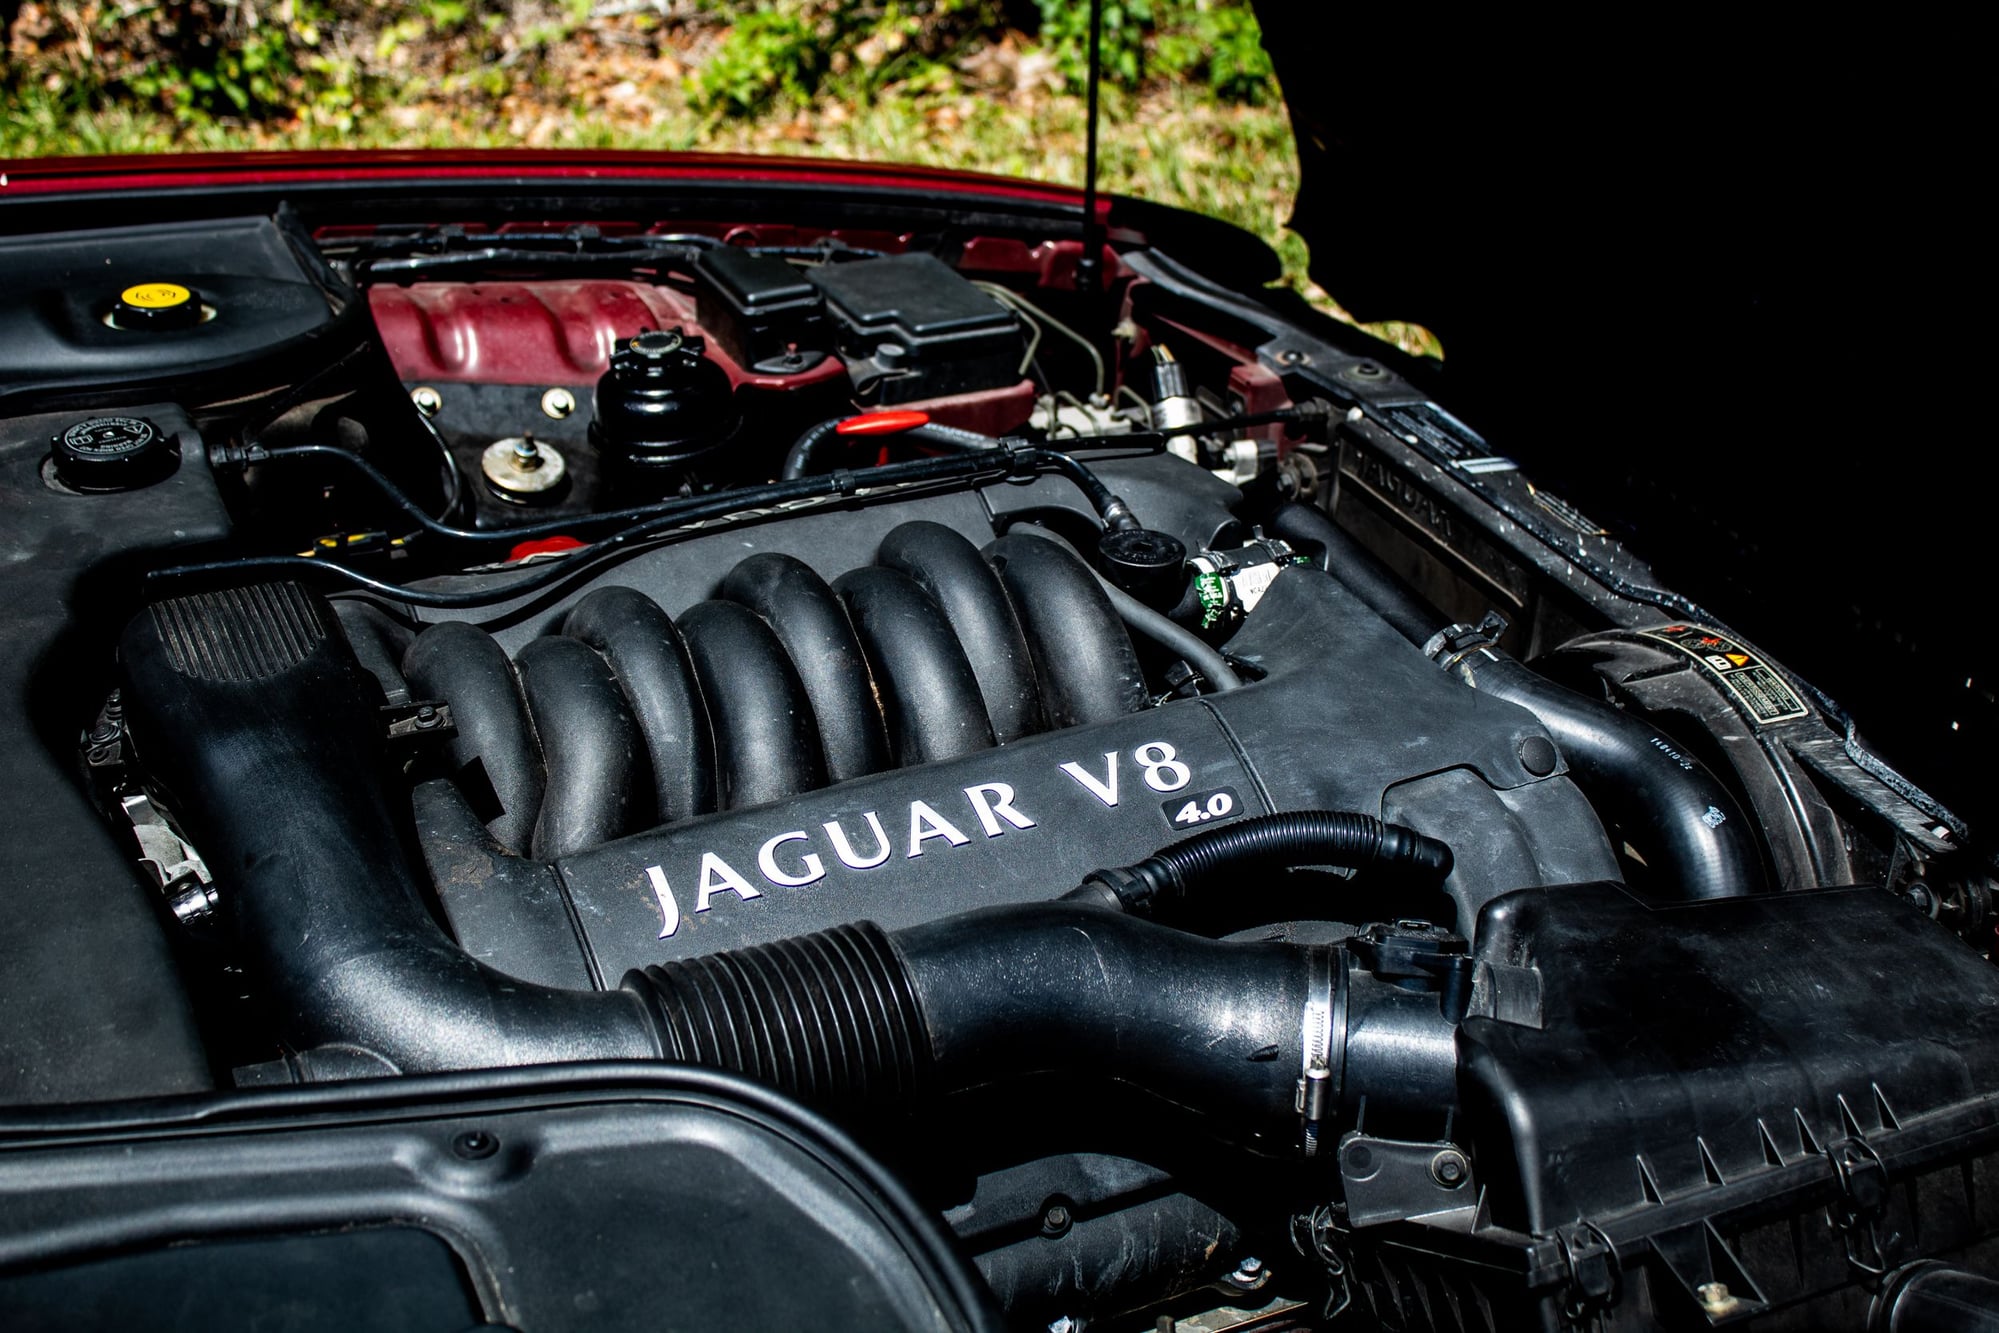 1999 Jaguar XJ8 - 1999 Jaguar XJ8 64K Miles - Used - VIN SAJHD1041XC871564 - 64,007 Miles - 8 cyl - 2WD - Automatic - Sedan - Red - Jacksonville, FL 32225, United States